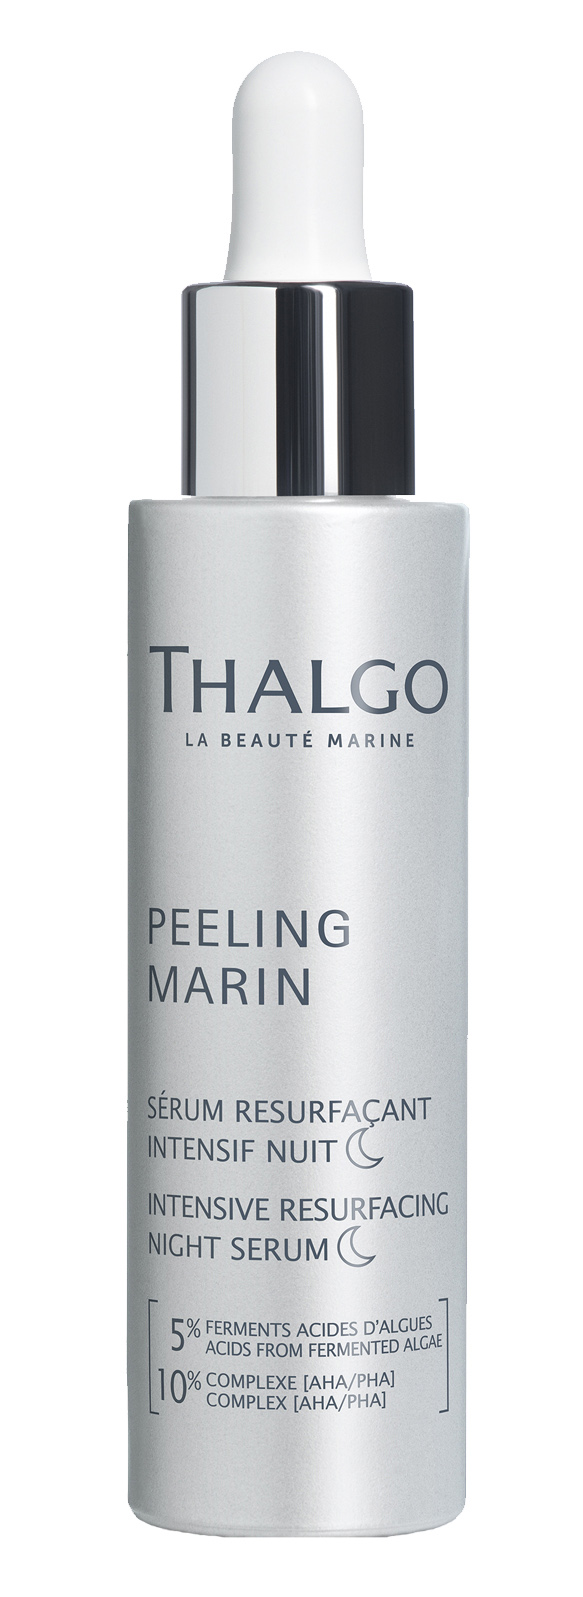 Thalgo Интенсивная обновляющая ночная сыворотка Intensive Resurfacing Night Serum, 30 мл (Thalgo, Peeling Marine)